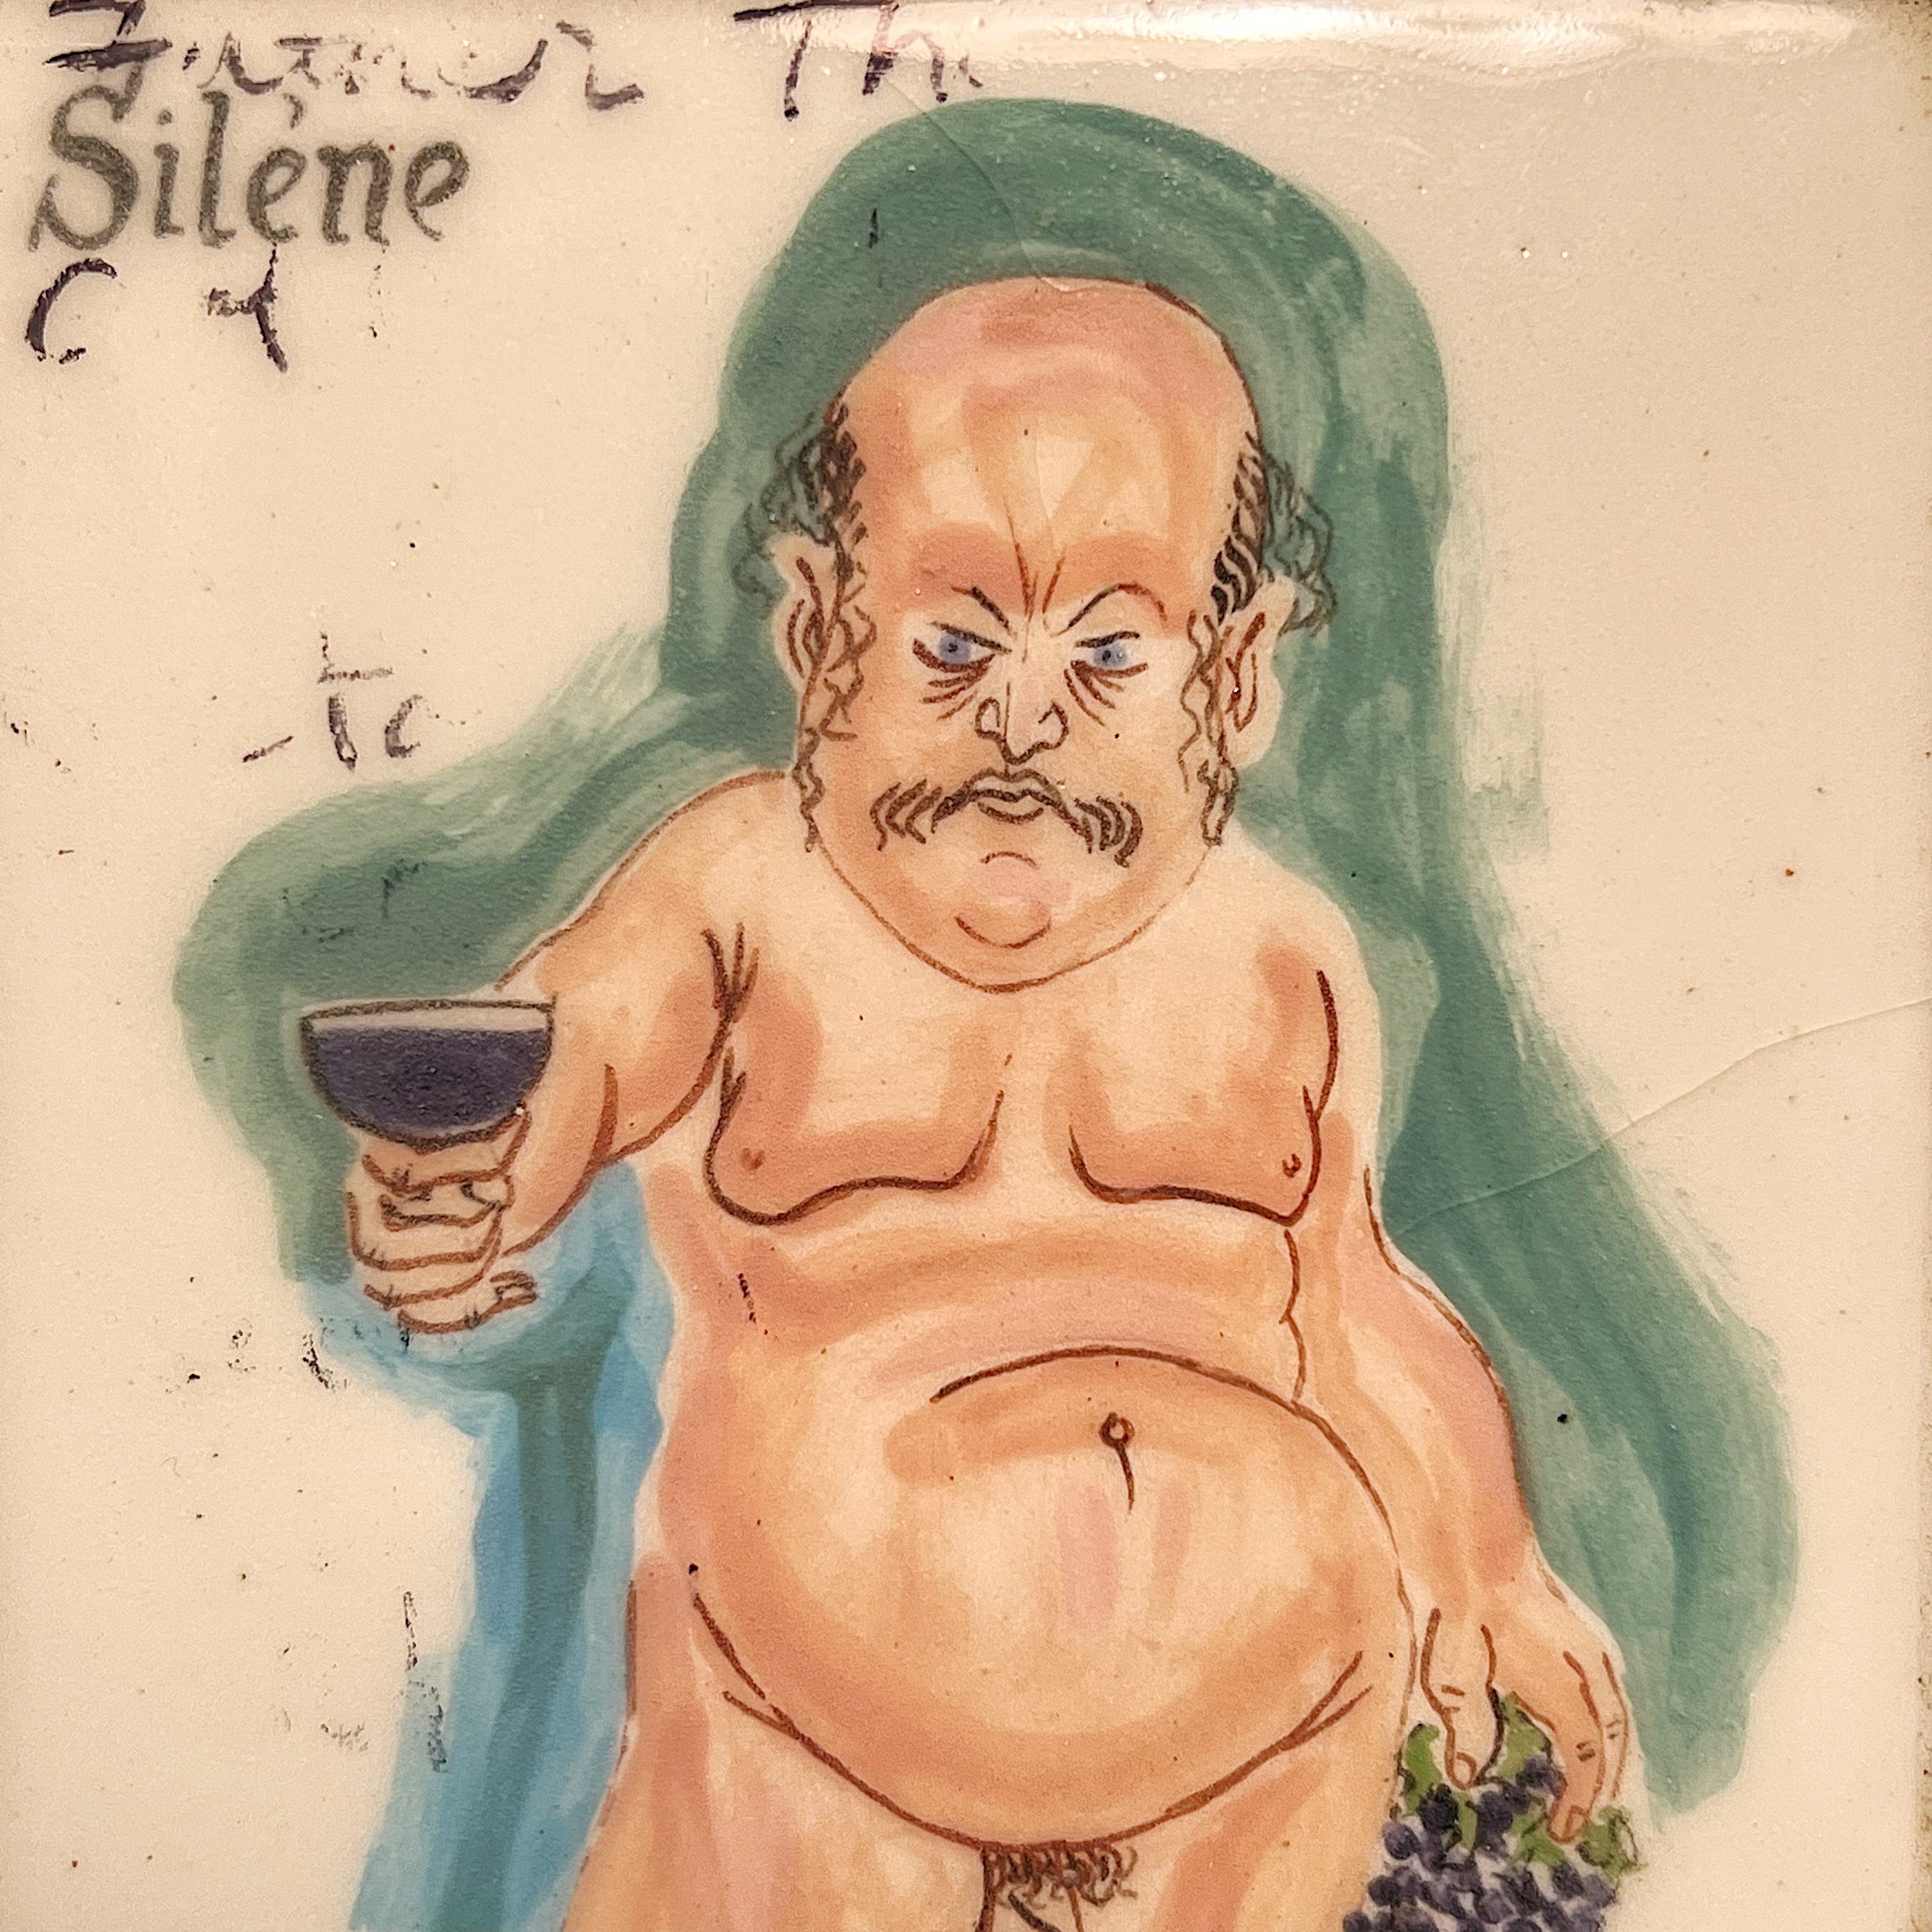 Alonzo Hauser Painting On Tile of Nude Man Drinking Wine - Self Portrait? - Winery Decor - Minnesota Artist - Rare Humorous Artwork